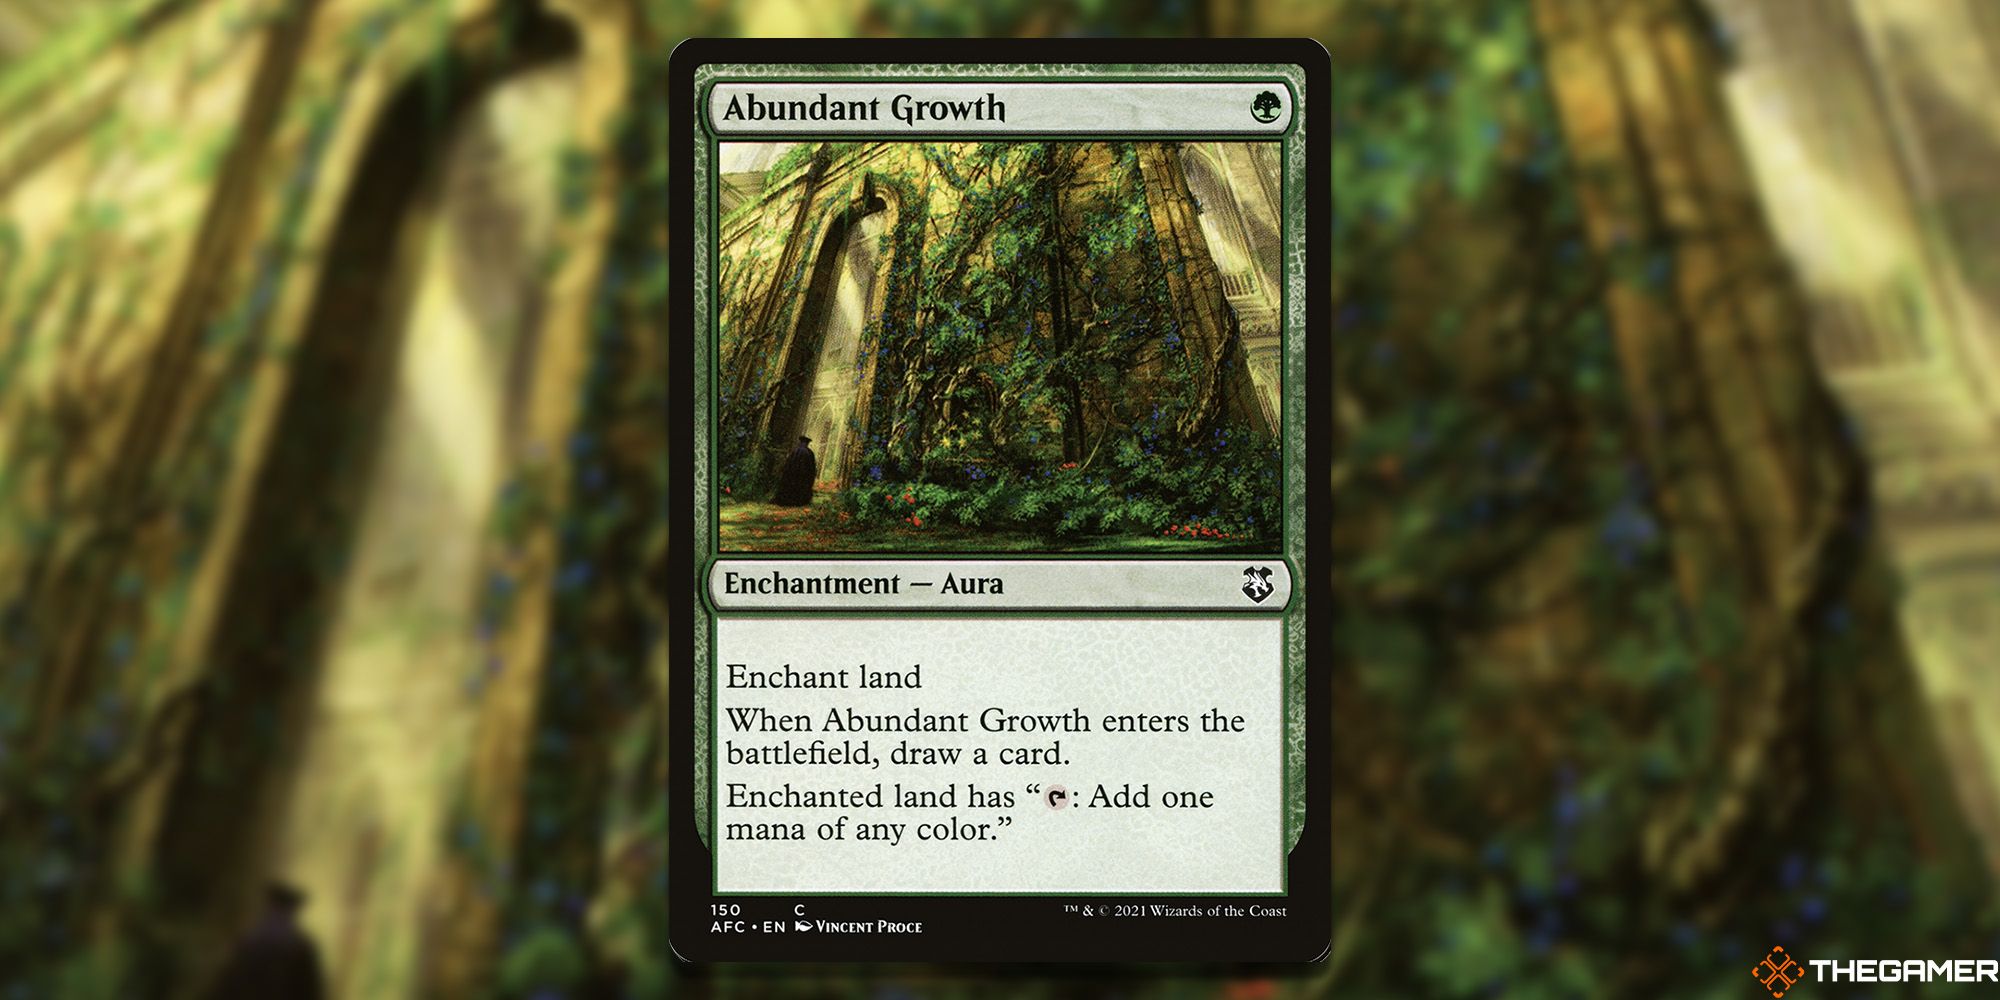 Abundant Growth card and art background